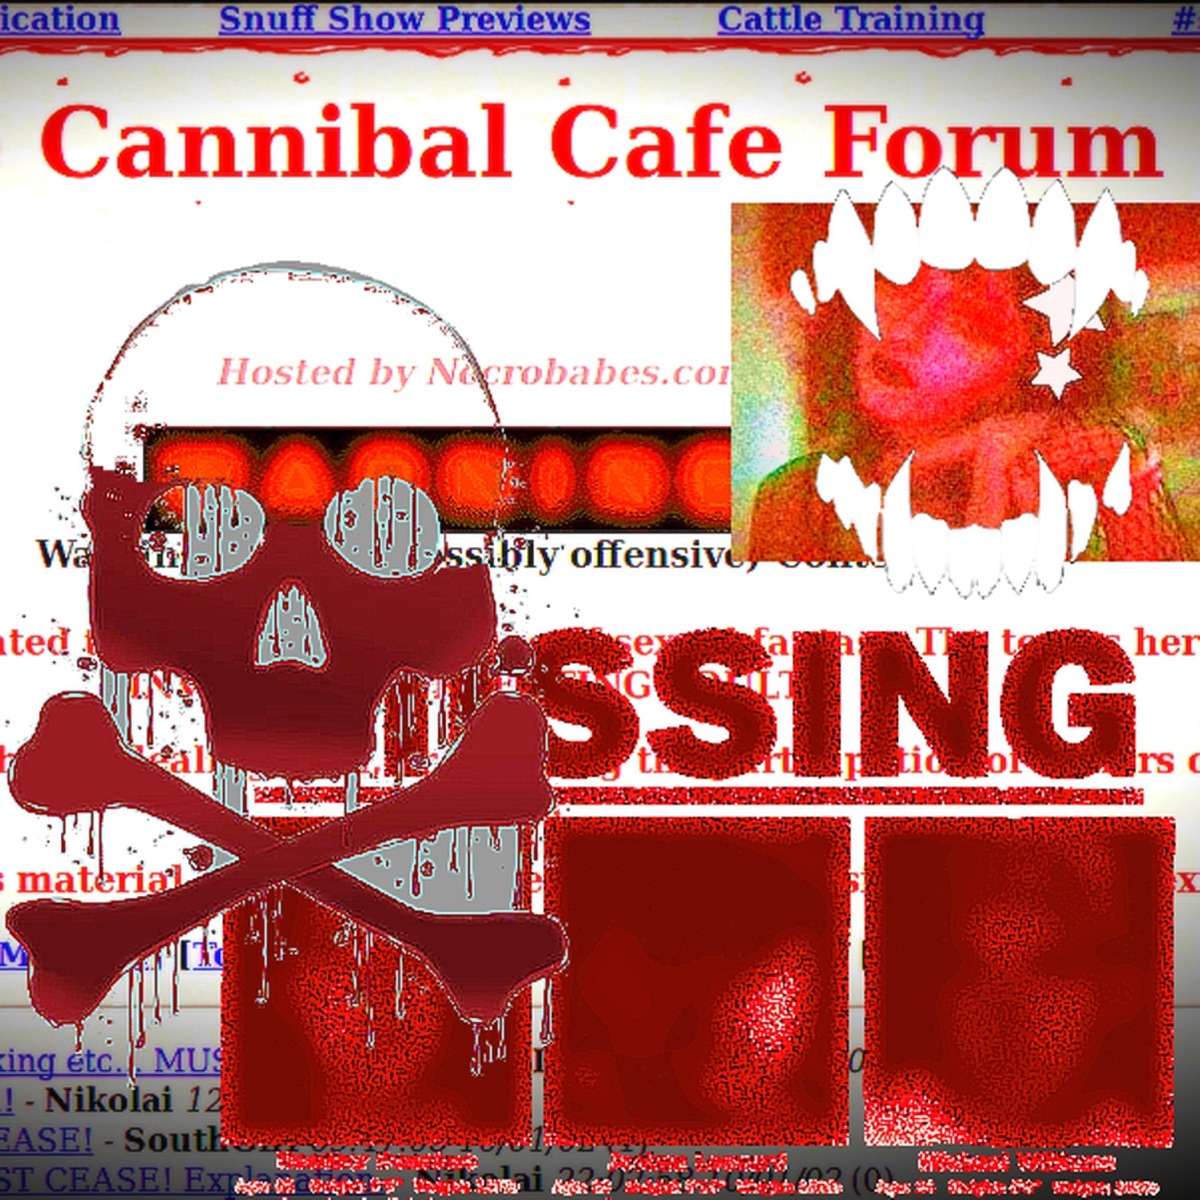 carissa abraham share the cannibal cafe forum photos